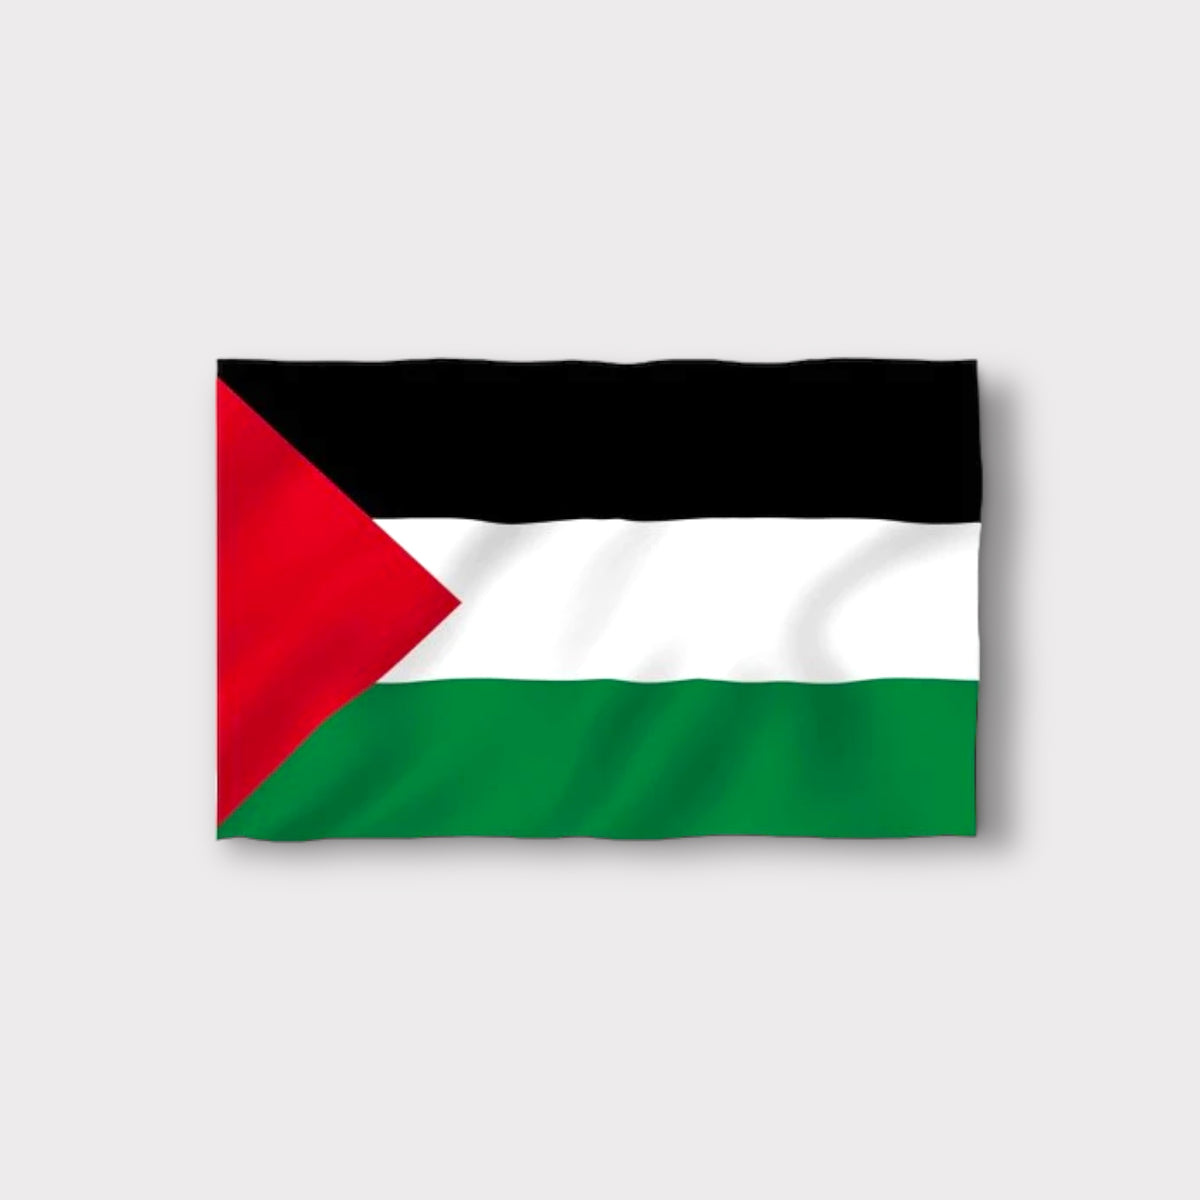 Palestine National Flag